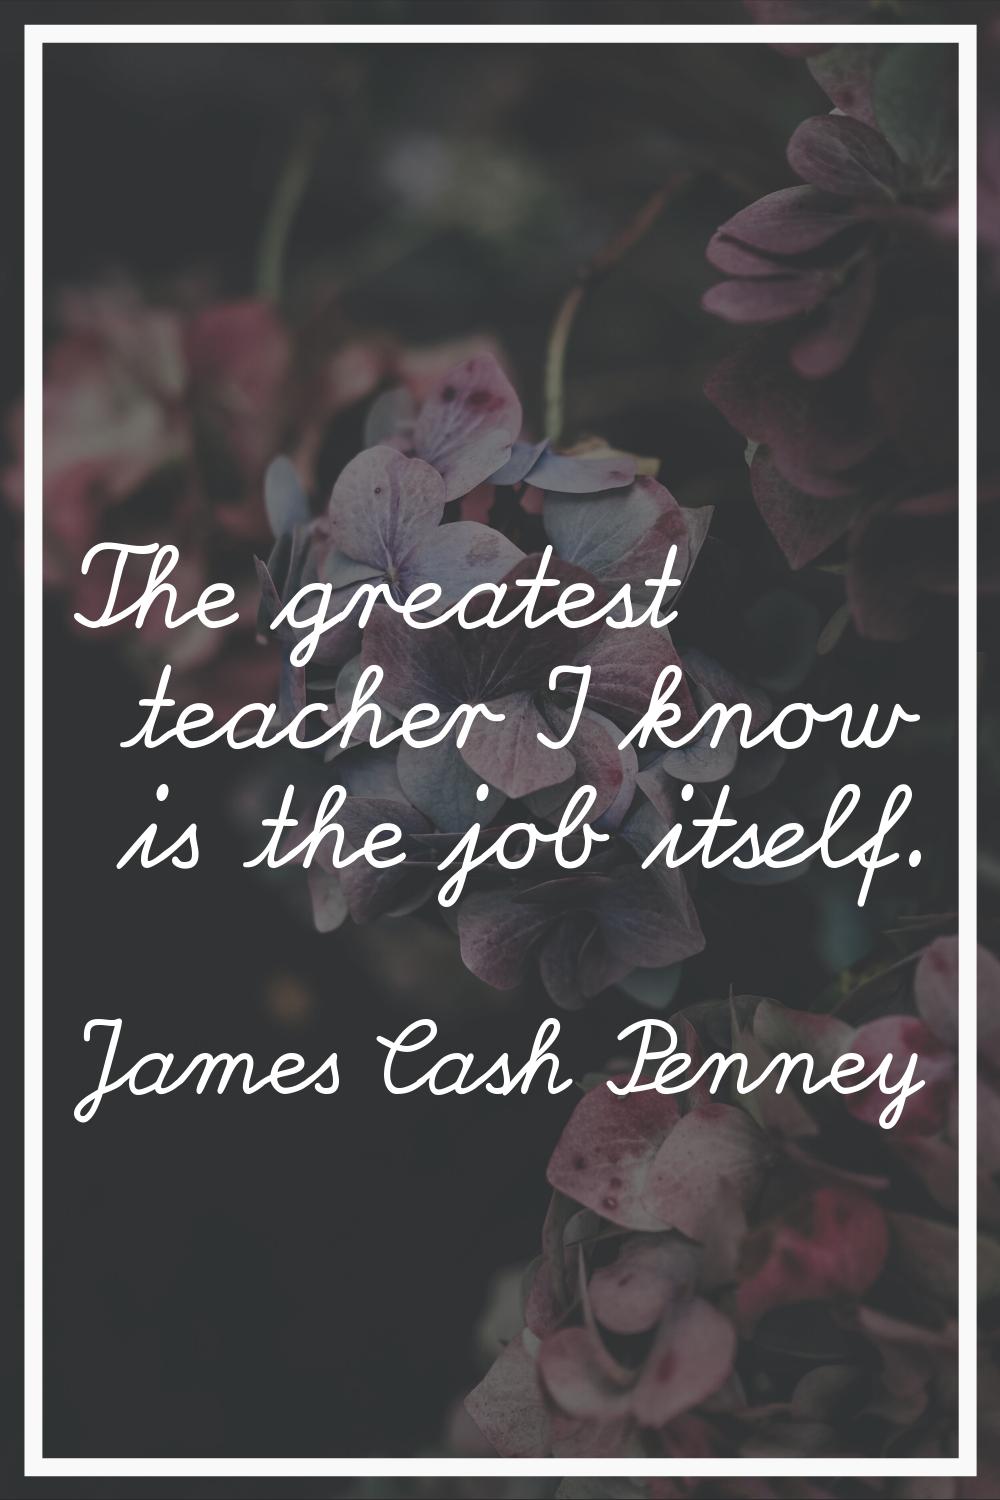 The greatest teacher I know is the job itself.